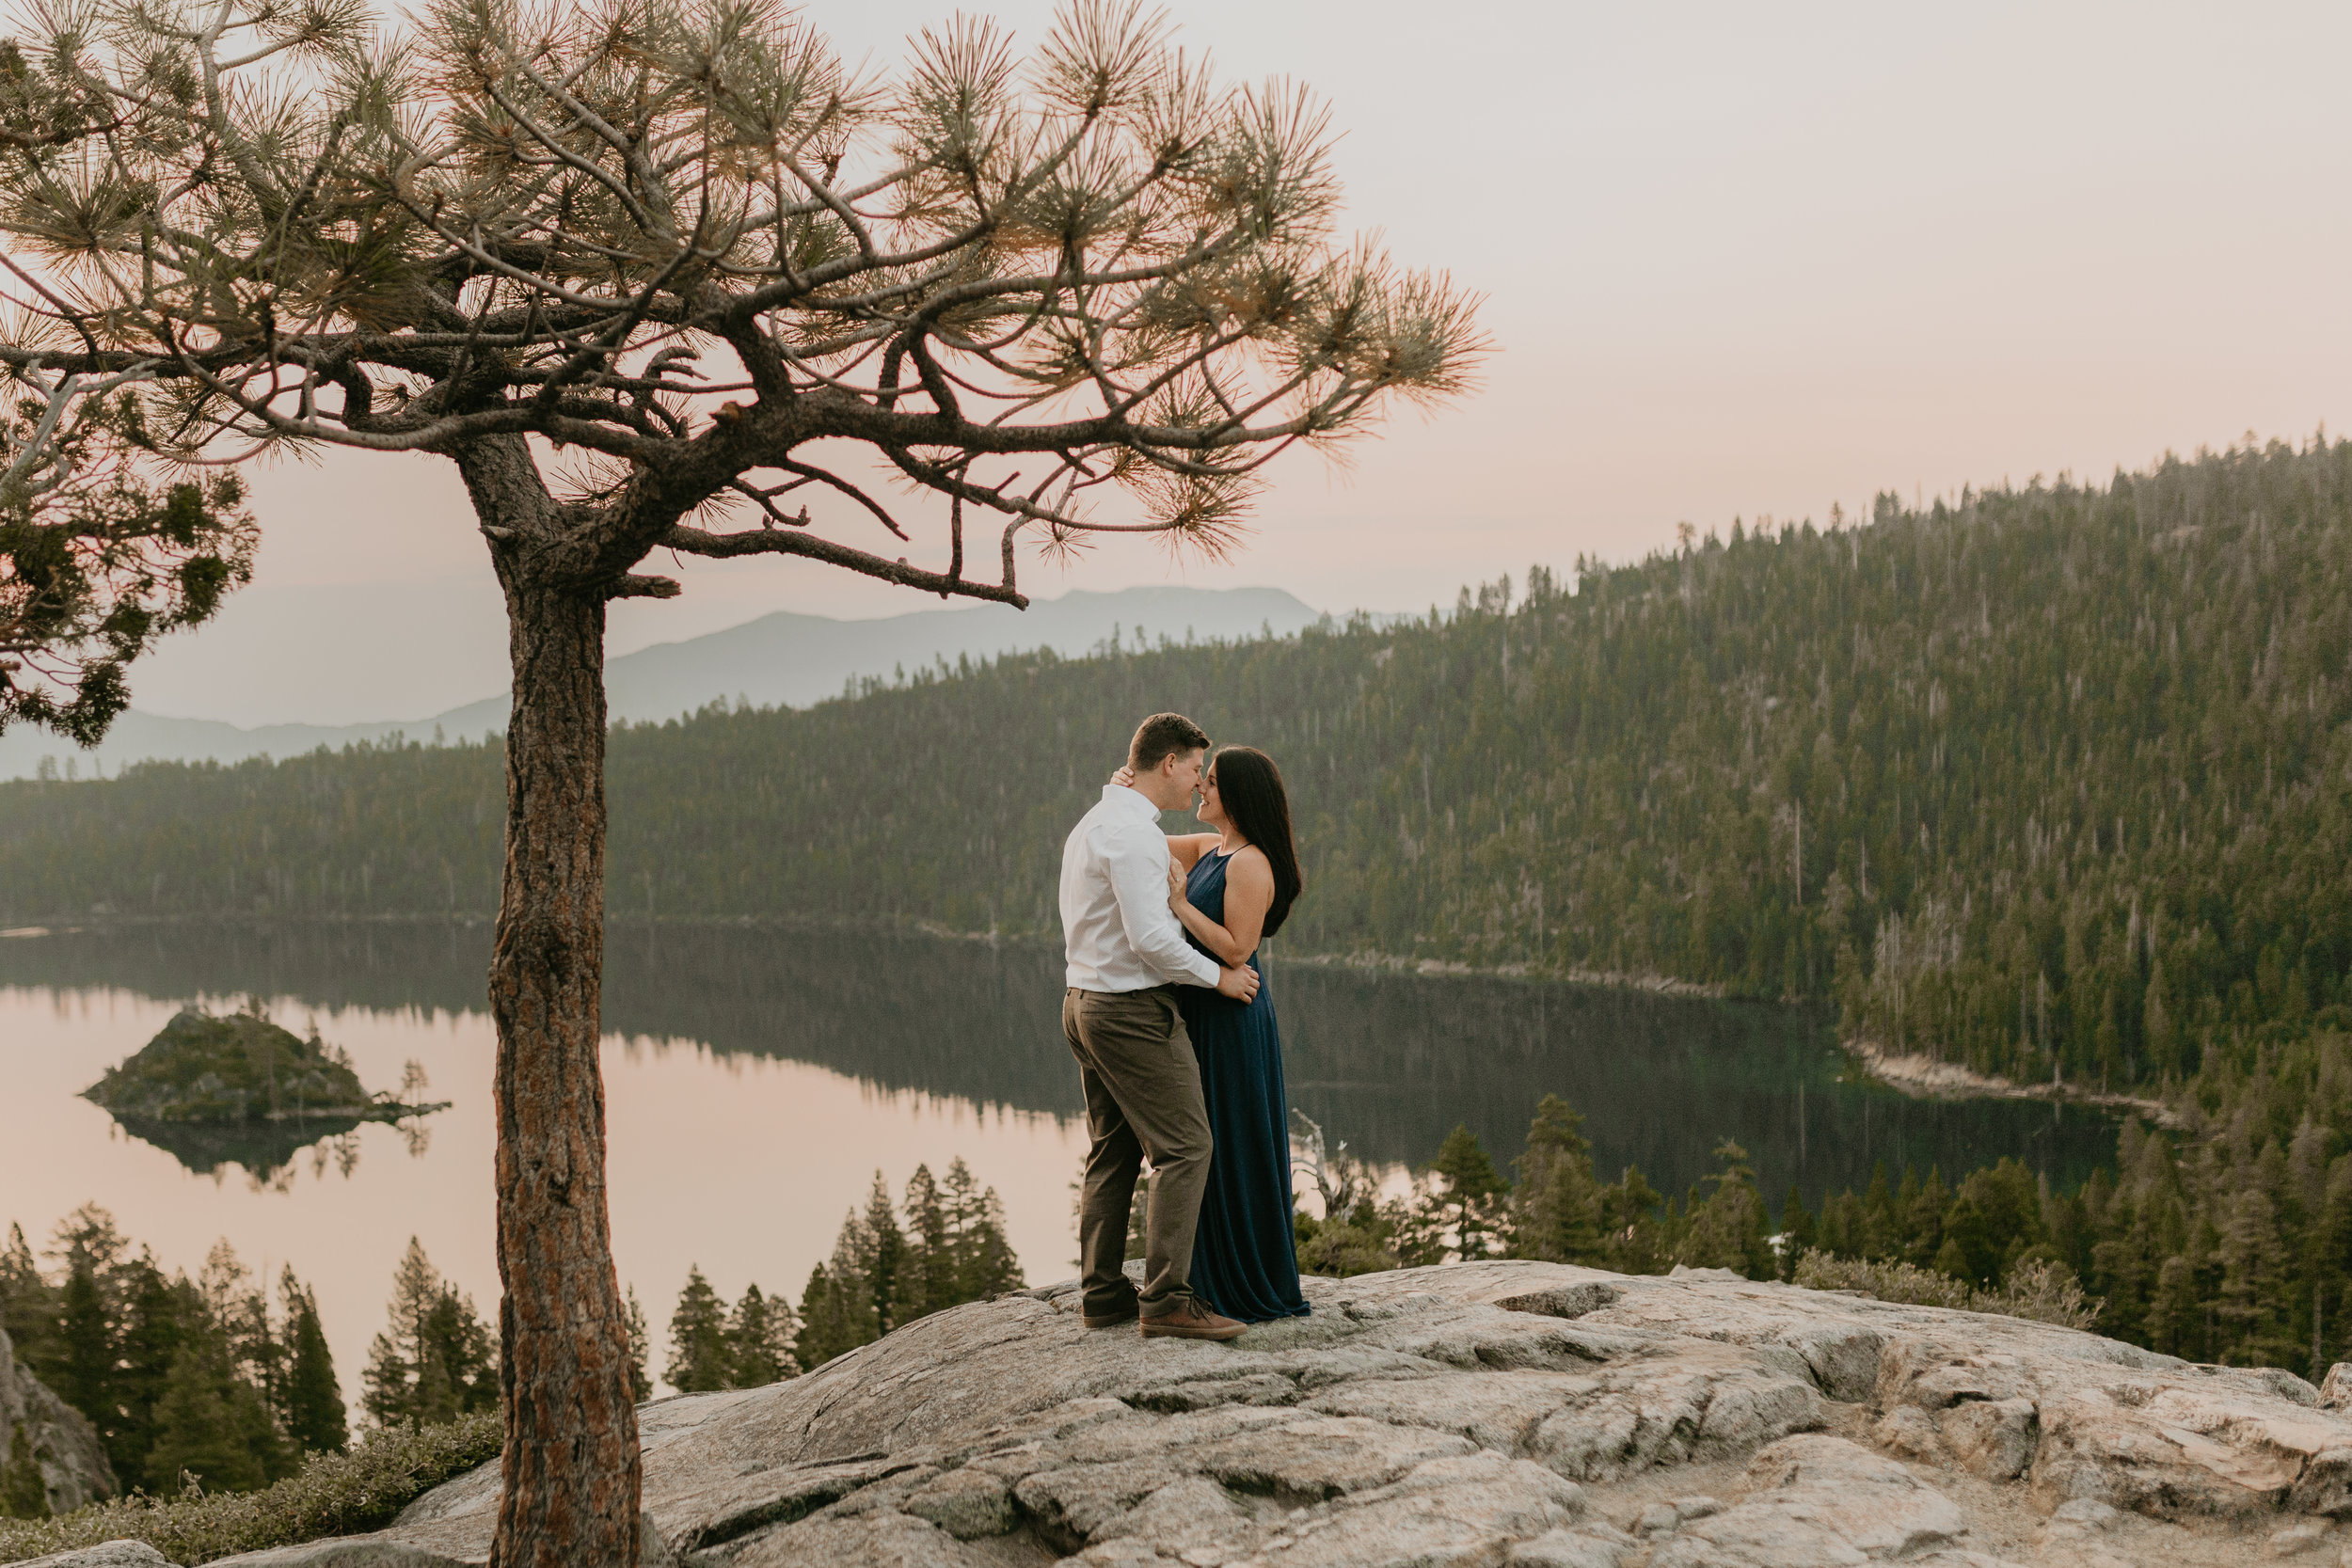 nicole-daacke-photography-lake-tahoe-sunrise-summer-adventure-engagement-photos-nevada-wedding-elopement-photographer-golden-emerald-bay-light-pine-trees-summer-vibe-fun-carefree-authentic-love-5.jpg